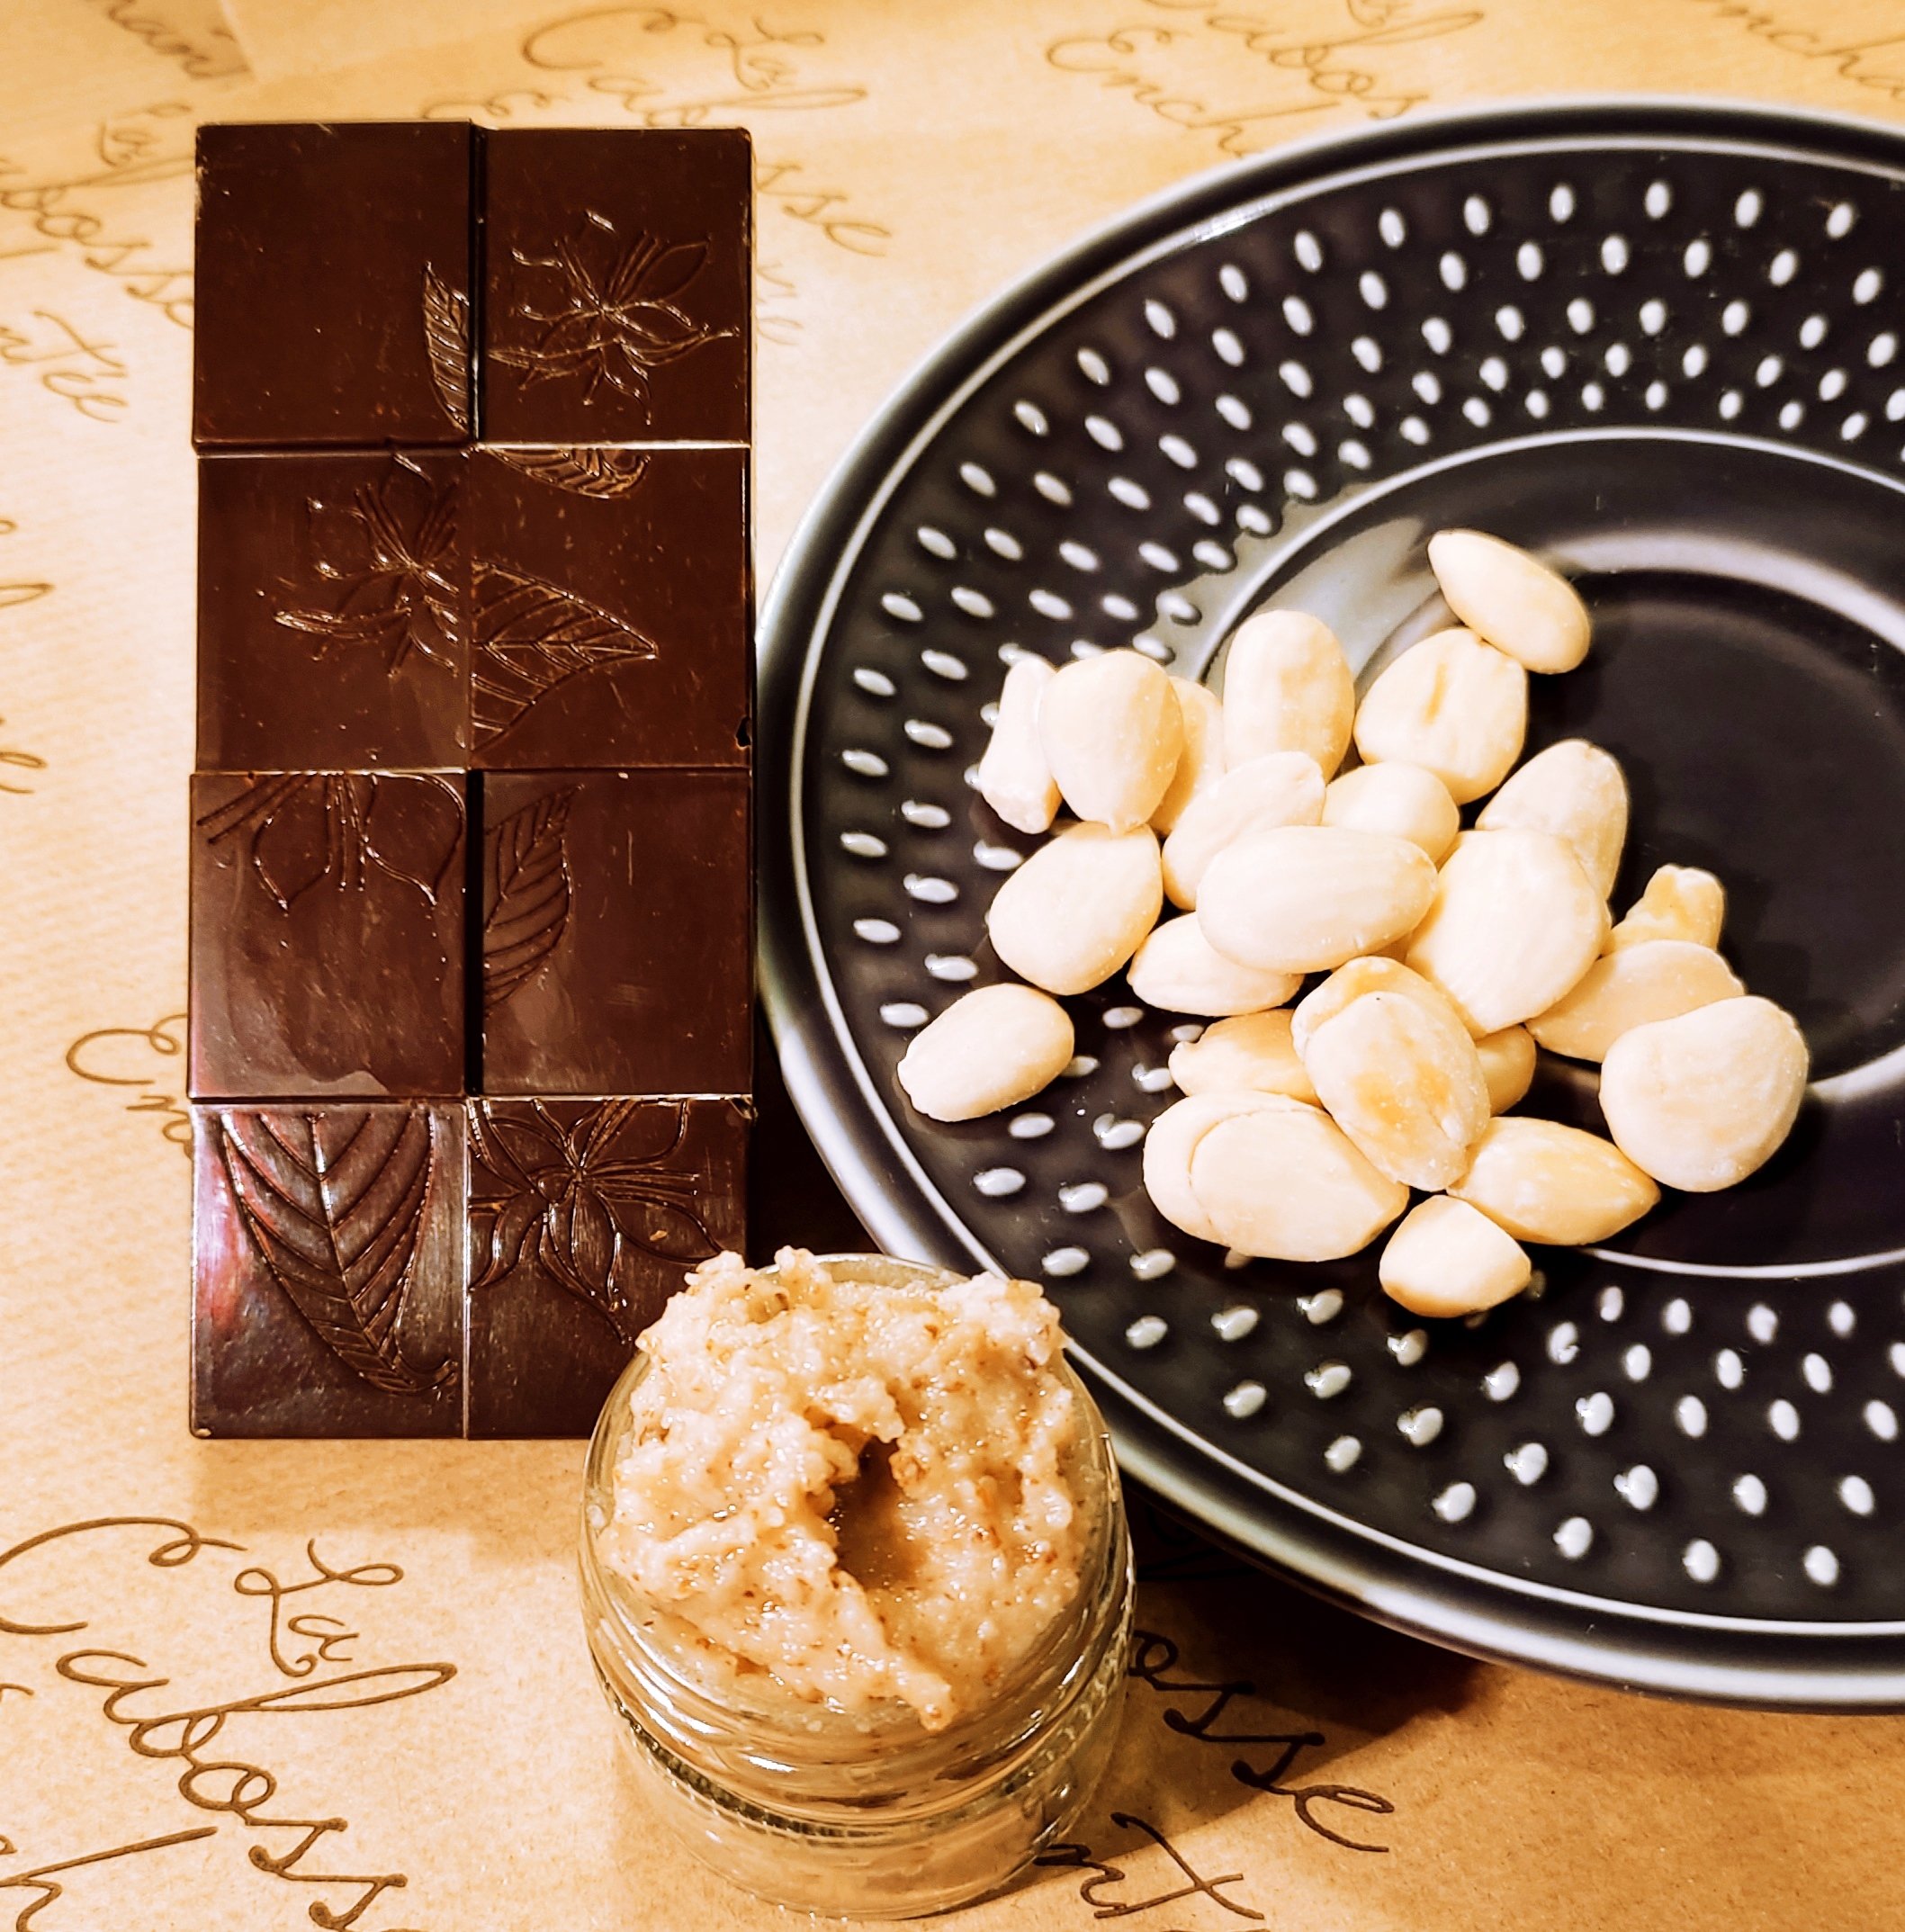 Ballotins de chocolats — La Cabosse Enchantée